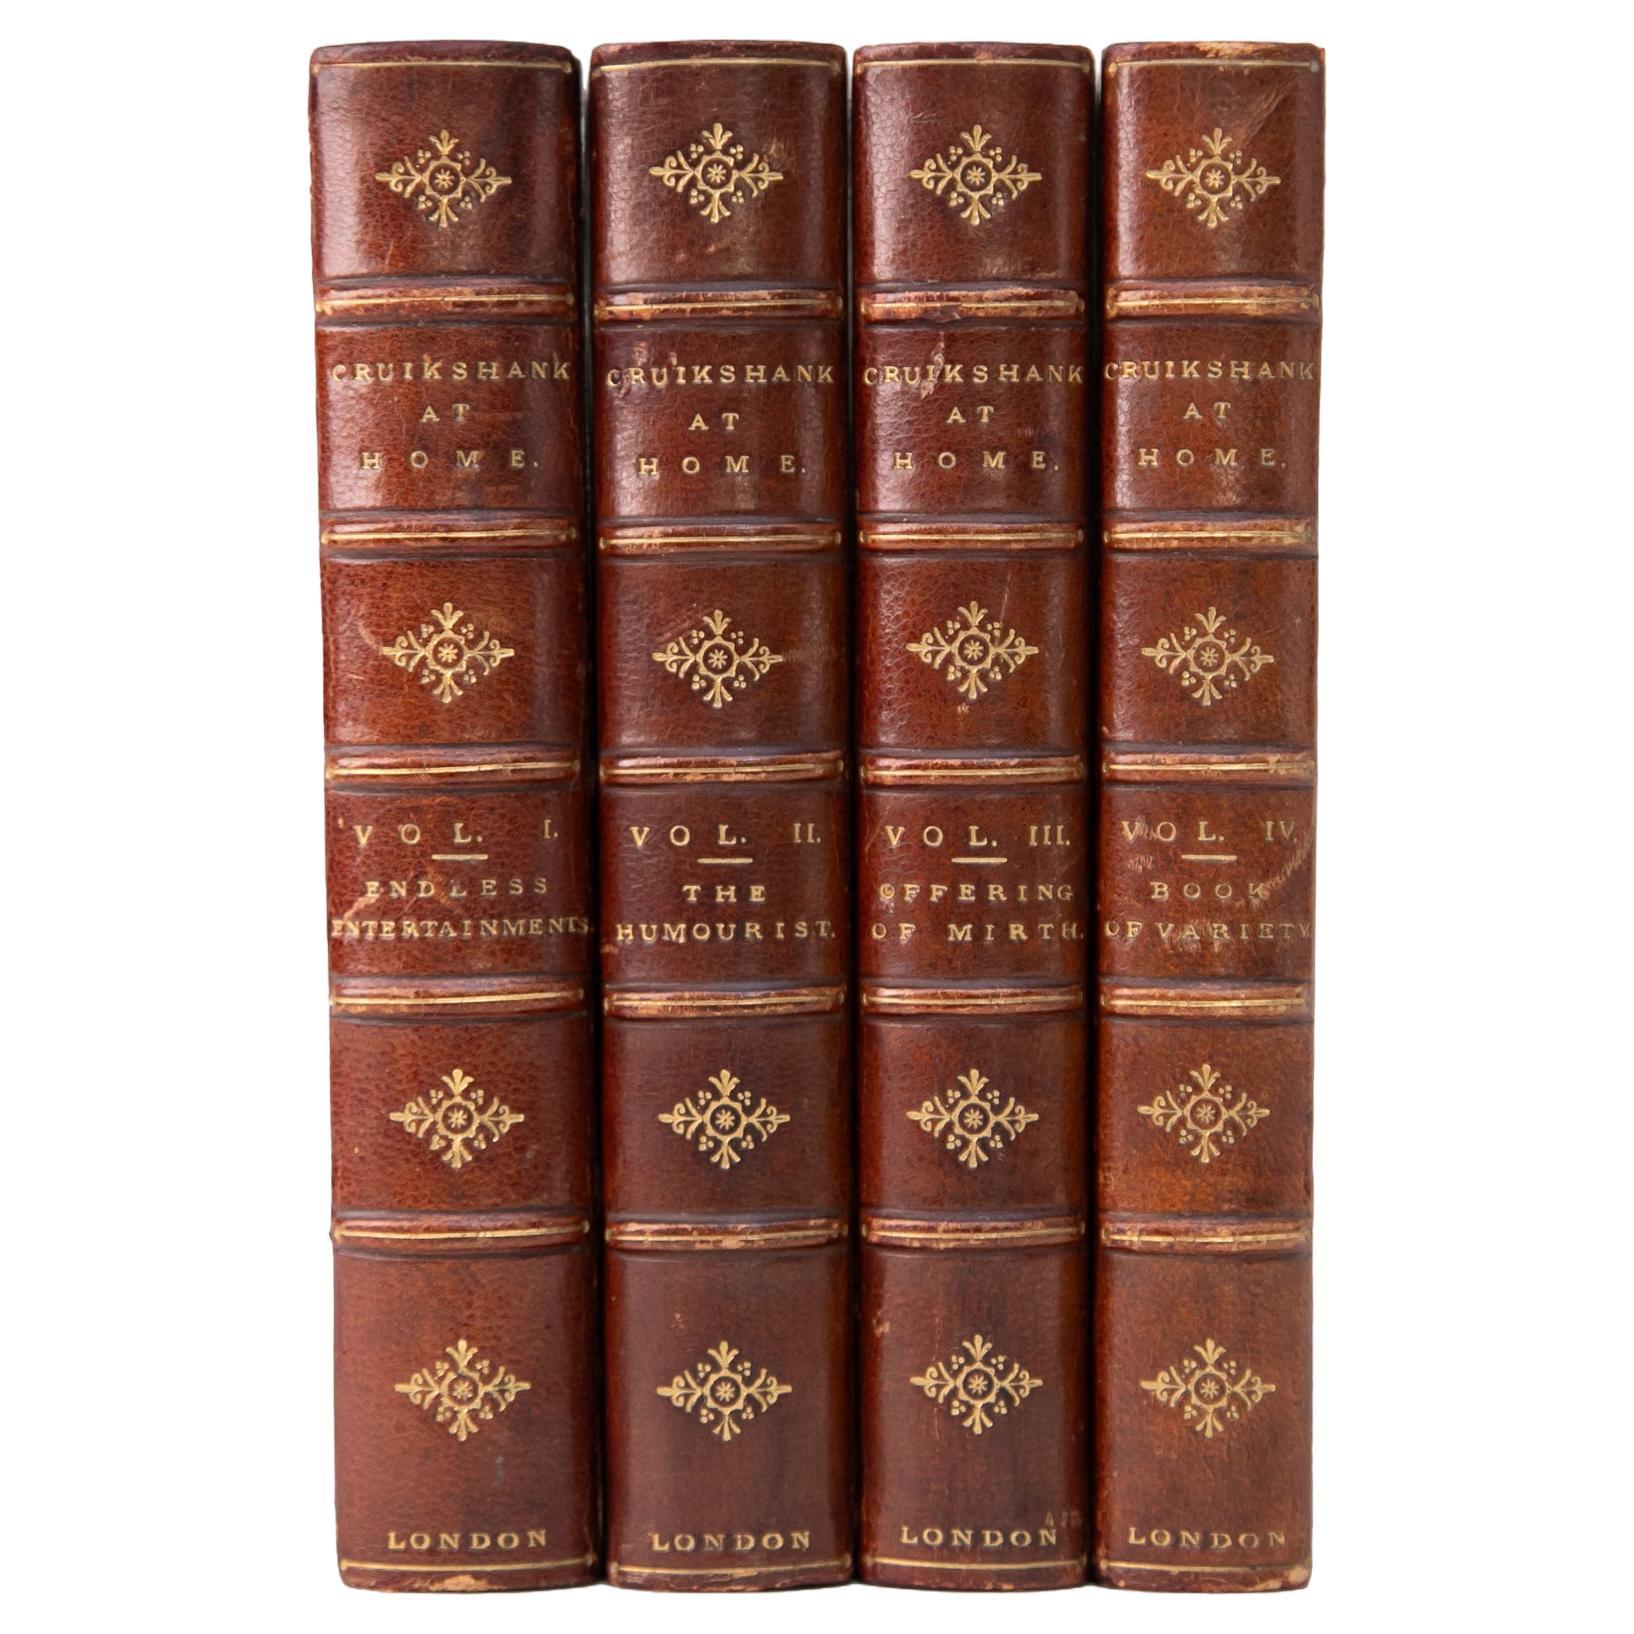 4 Volumes. Robert Cruikshank, Cruikshank at Home